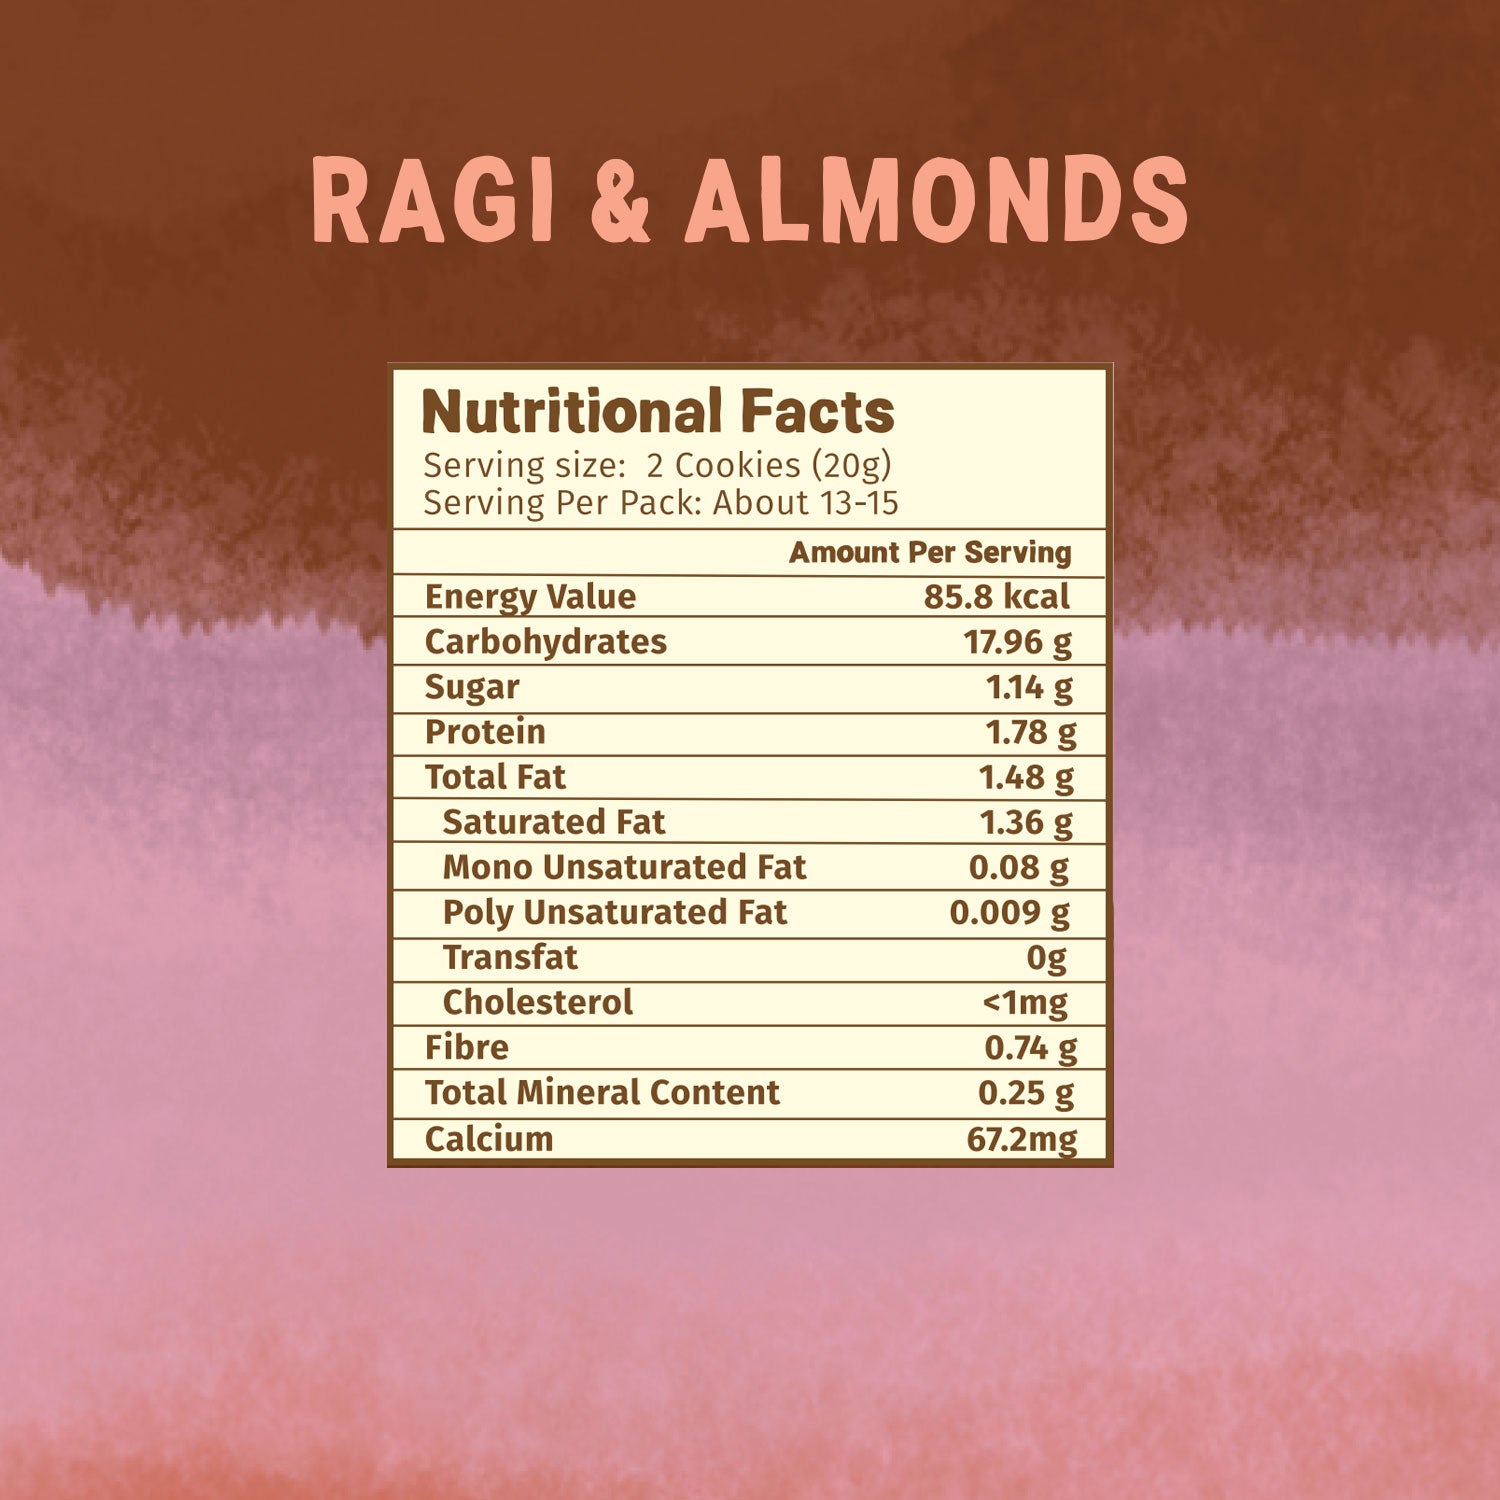 Healthy & Nutritional  Millet & Jaggery Cookies | Ragi & Almonds | Pack of 3